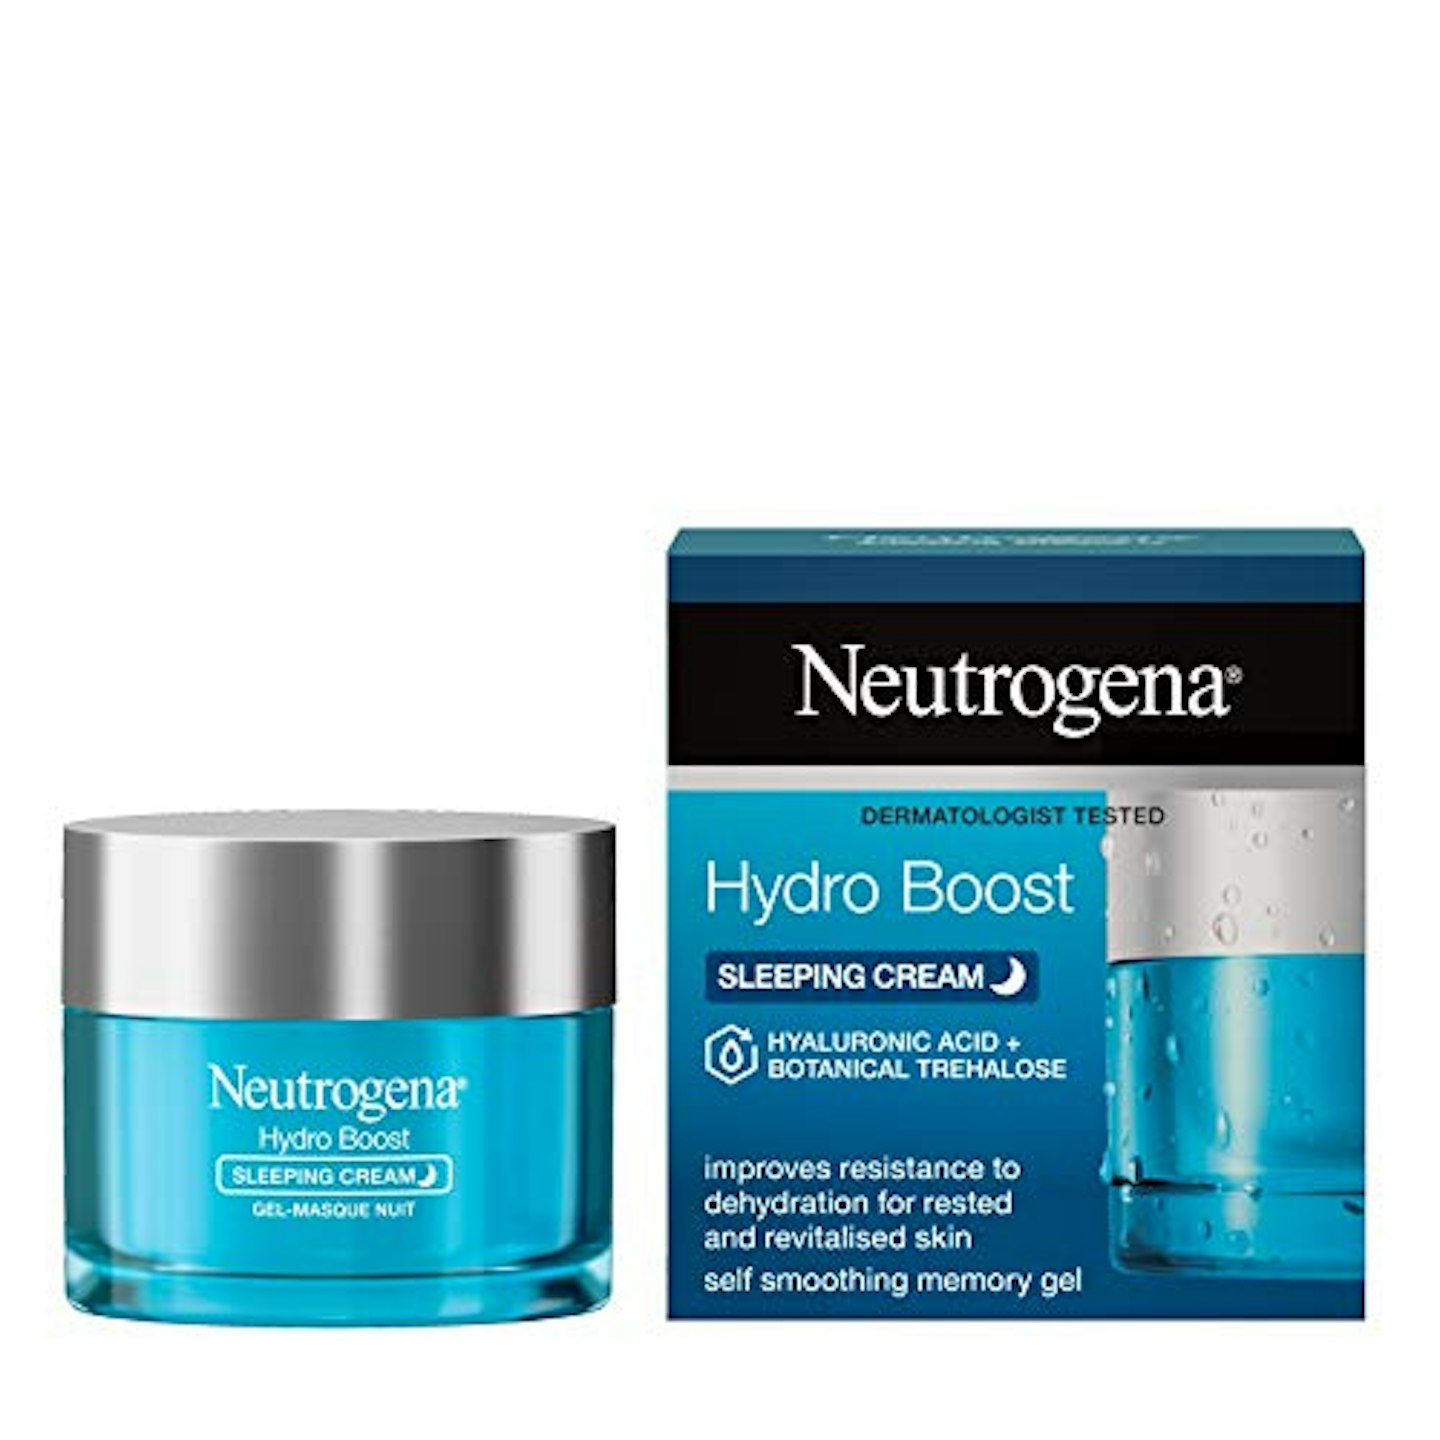 Neutrogena GB Hydroboost Sleeping Cream